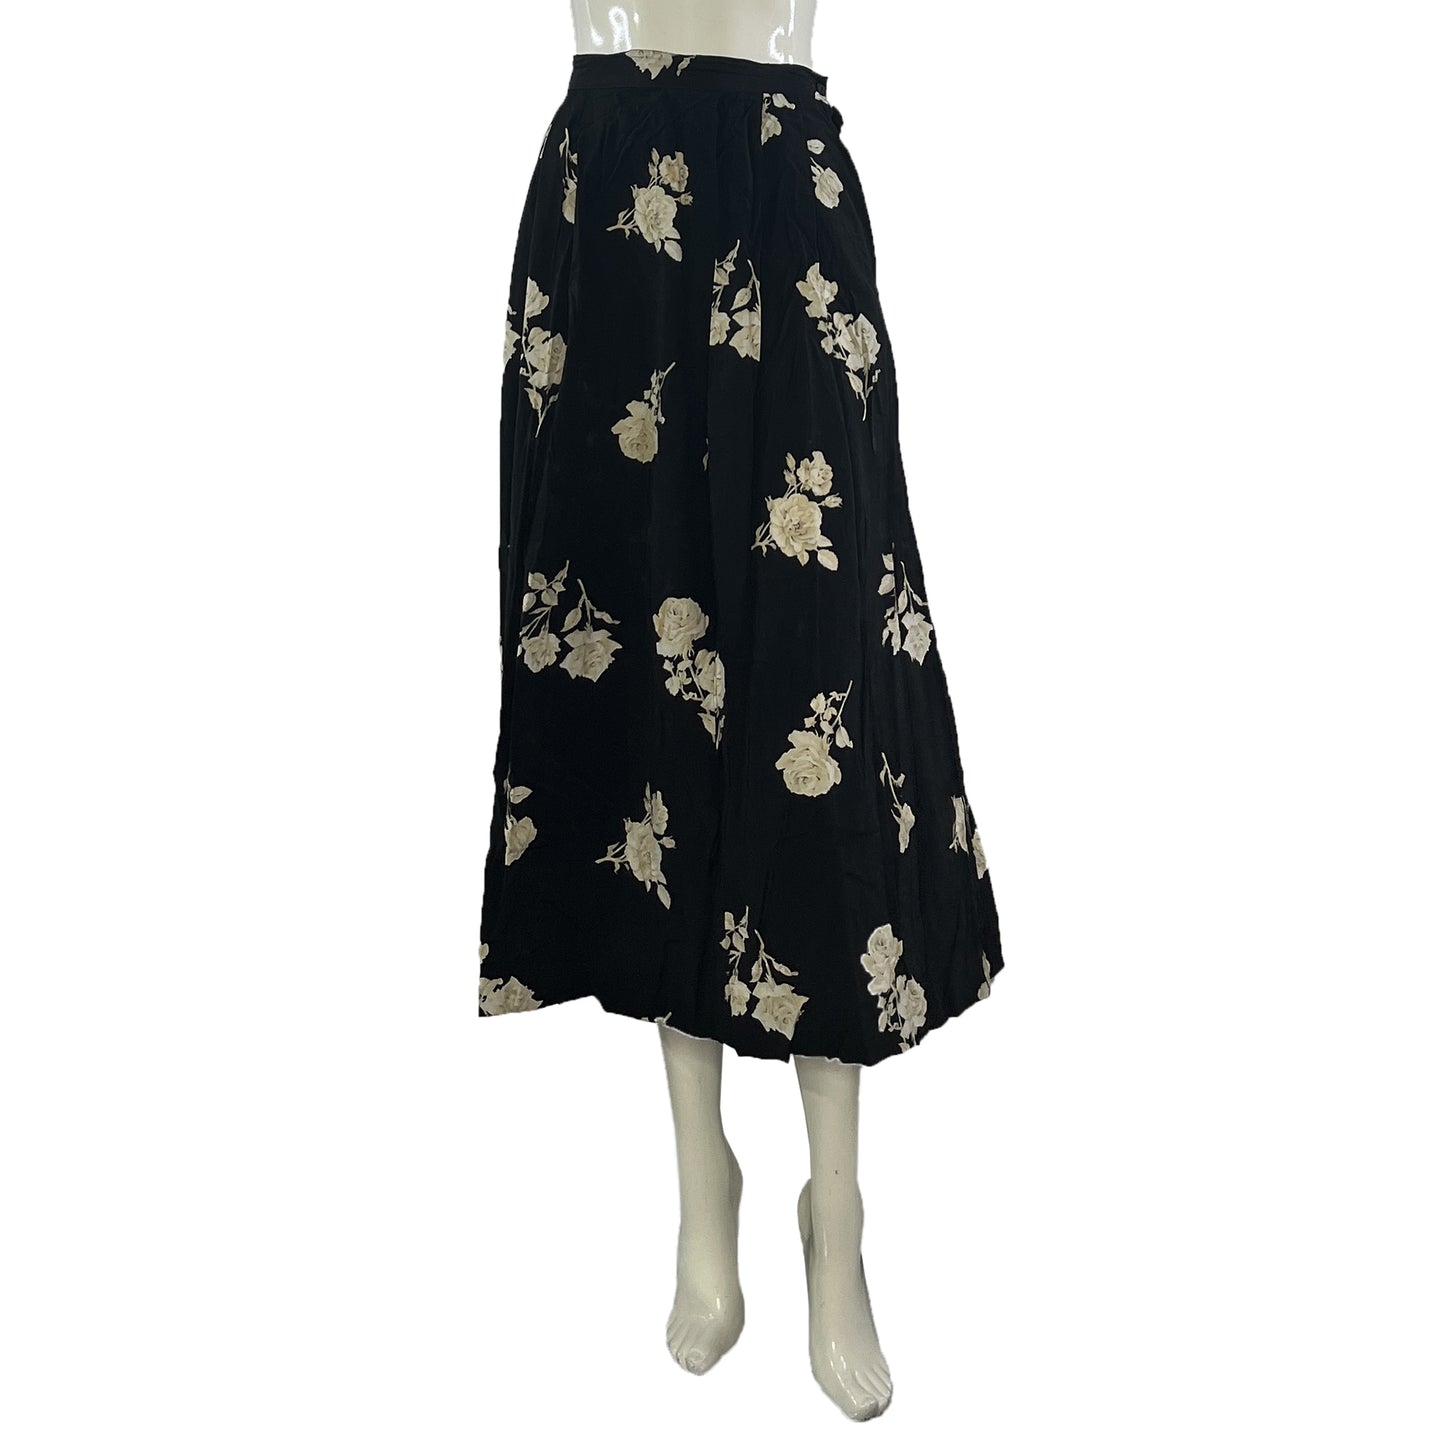 Talbots Skirt Below-Knee Pleats Flowy Roses Black, Cream Size 12 SKU 000417